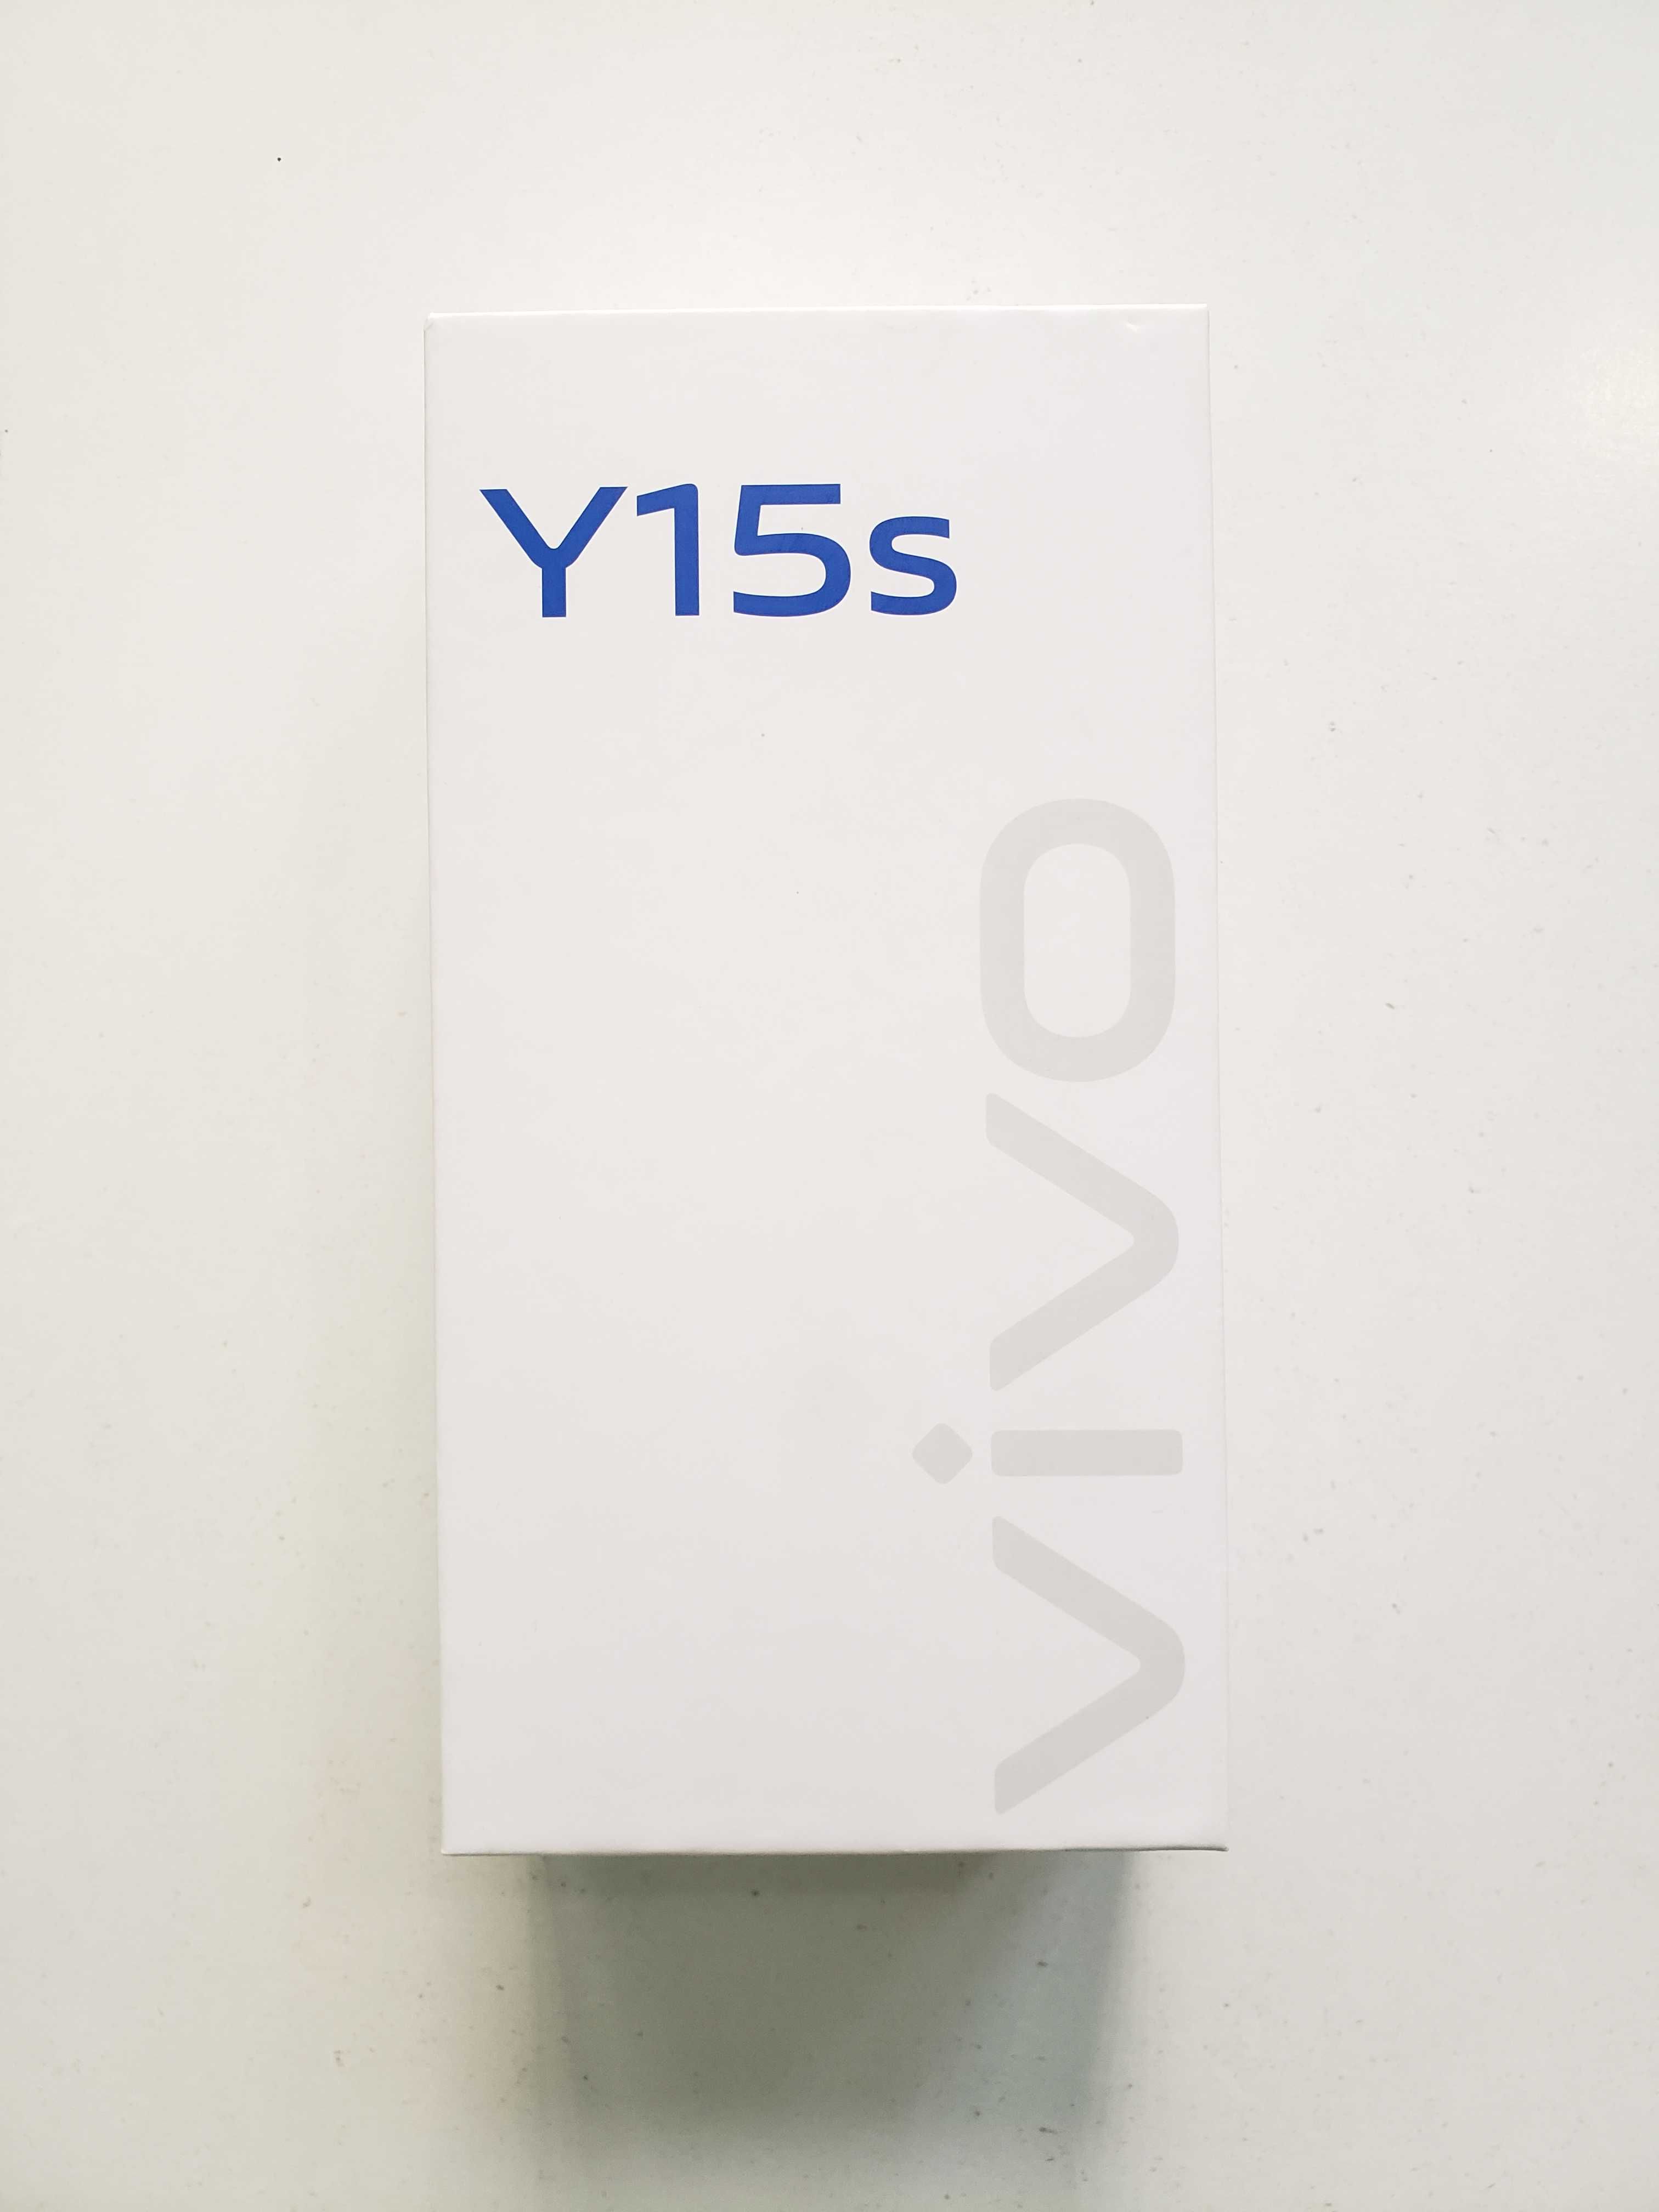 Коробка от смартфона Vivo Y15s